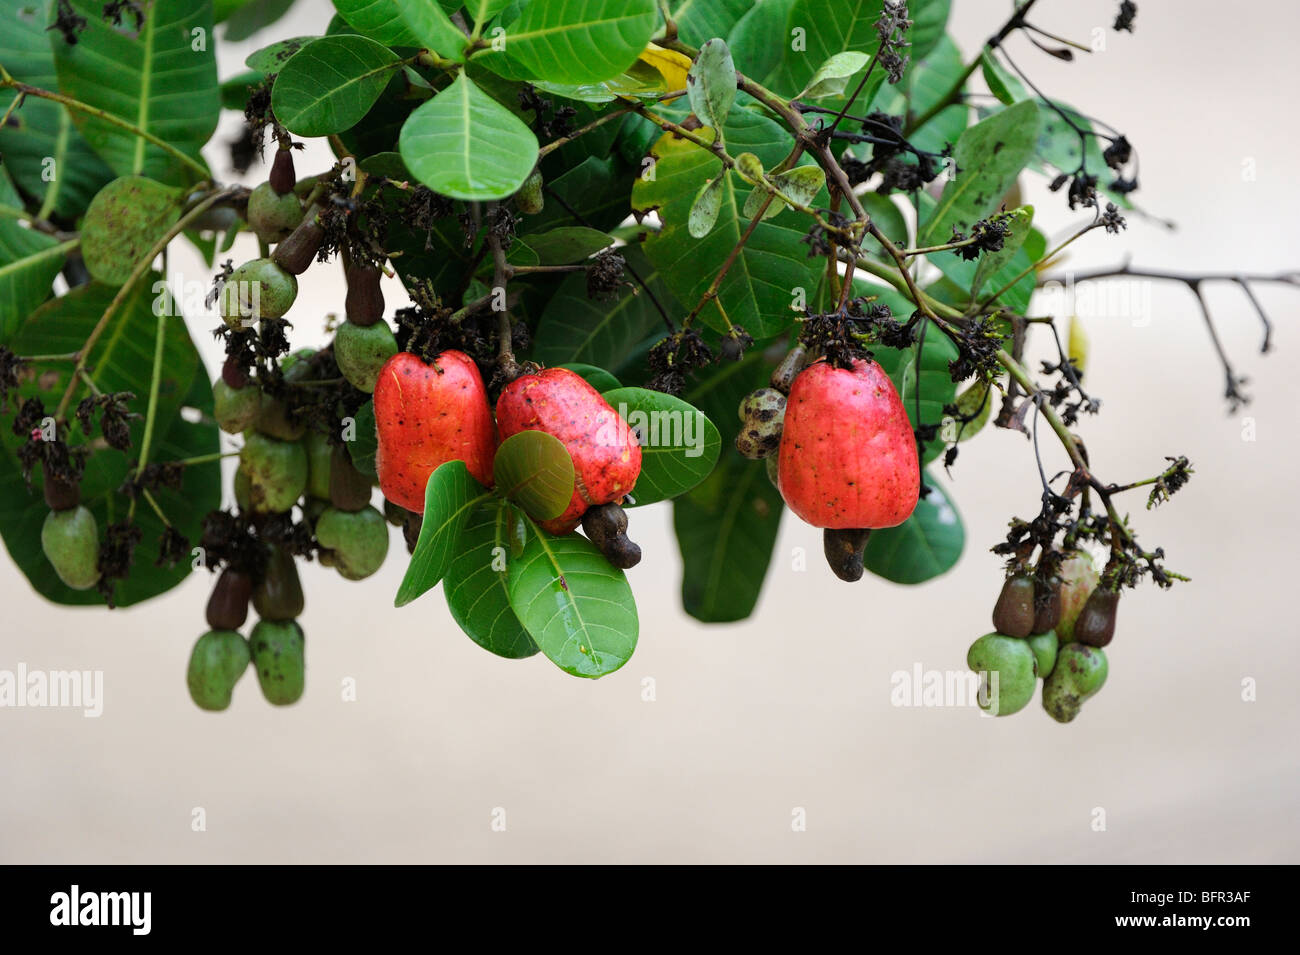 Red anacardi frutto (Excelsum occidentale) con dado, Alata Floresta, Brasile. Foto Stock